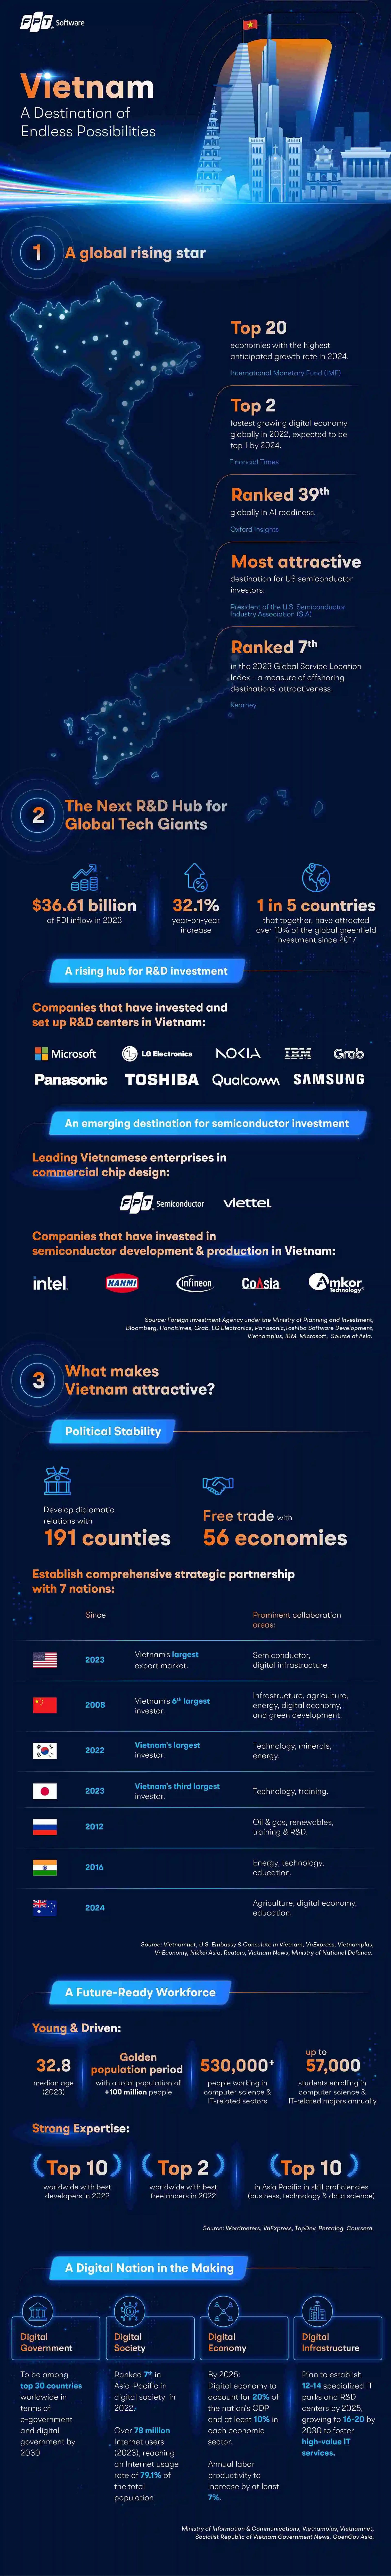 Vietnam - A Destination of Endless Possibilities